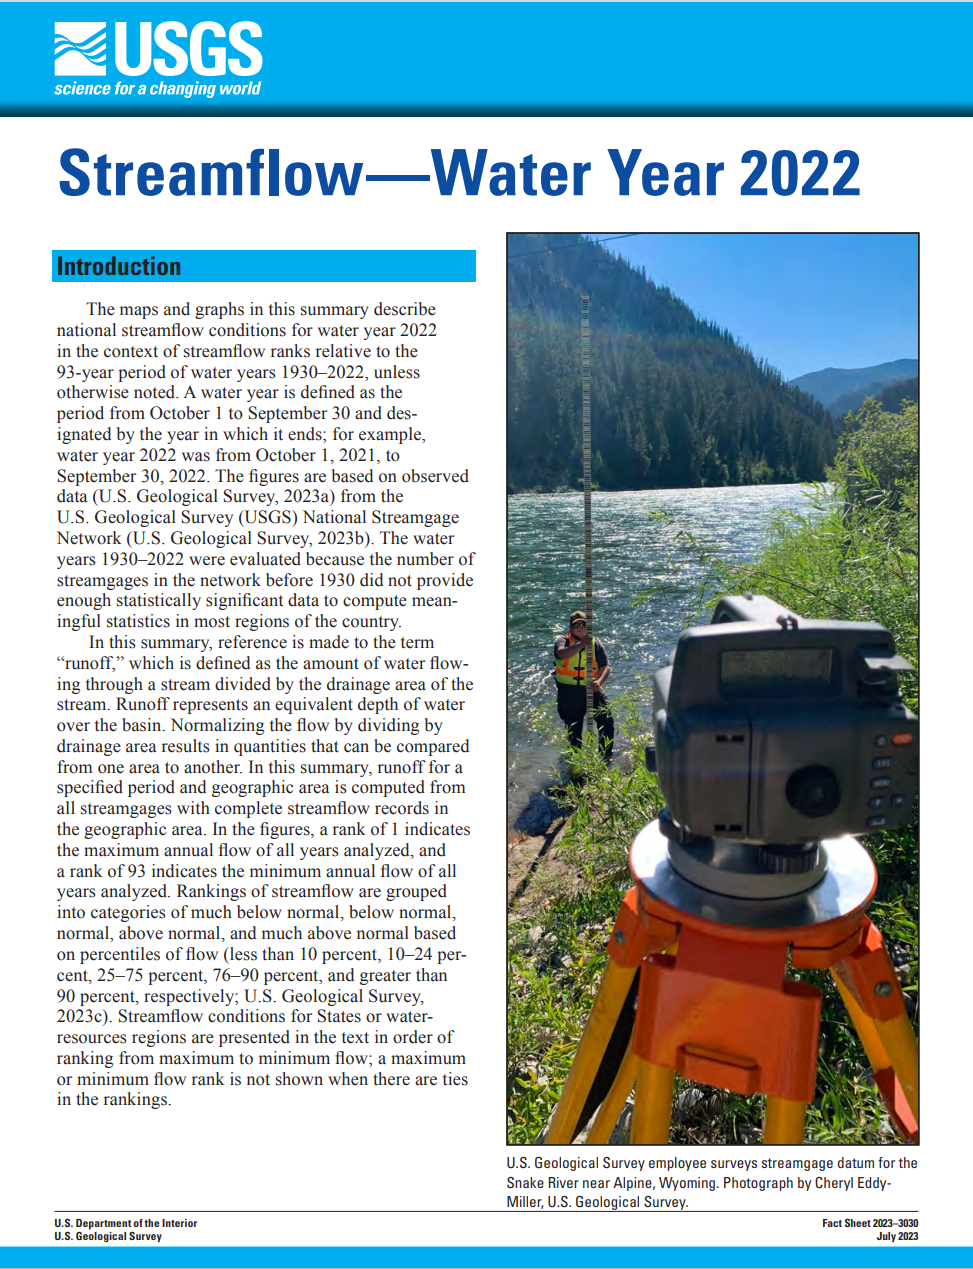 Streamflow -- Water Year 2022